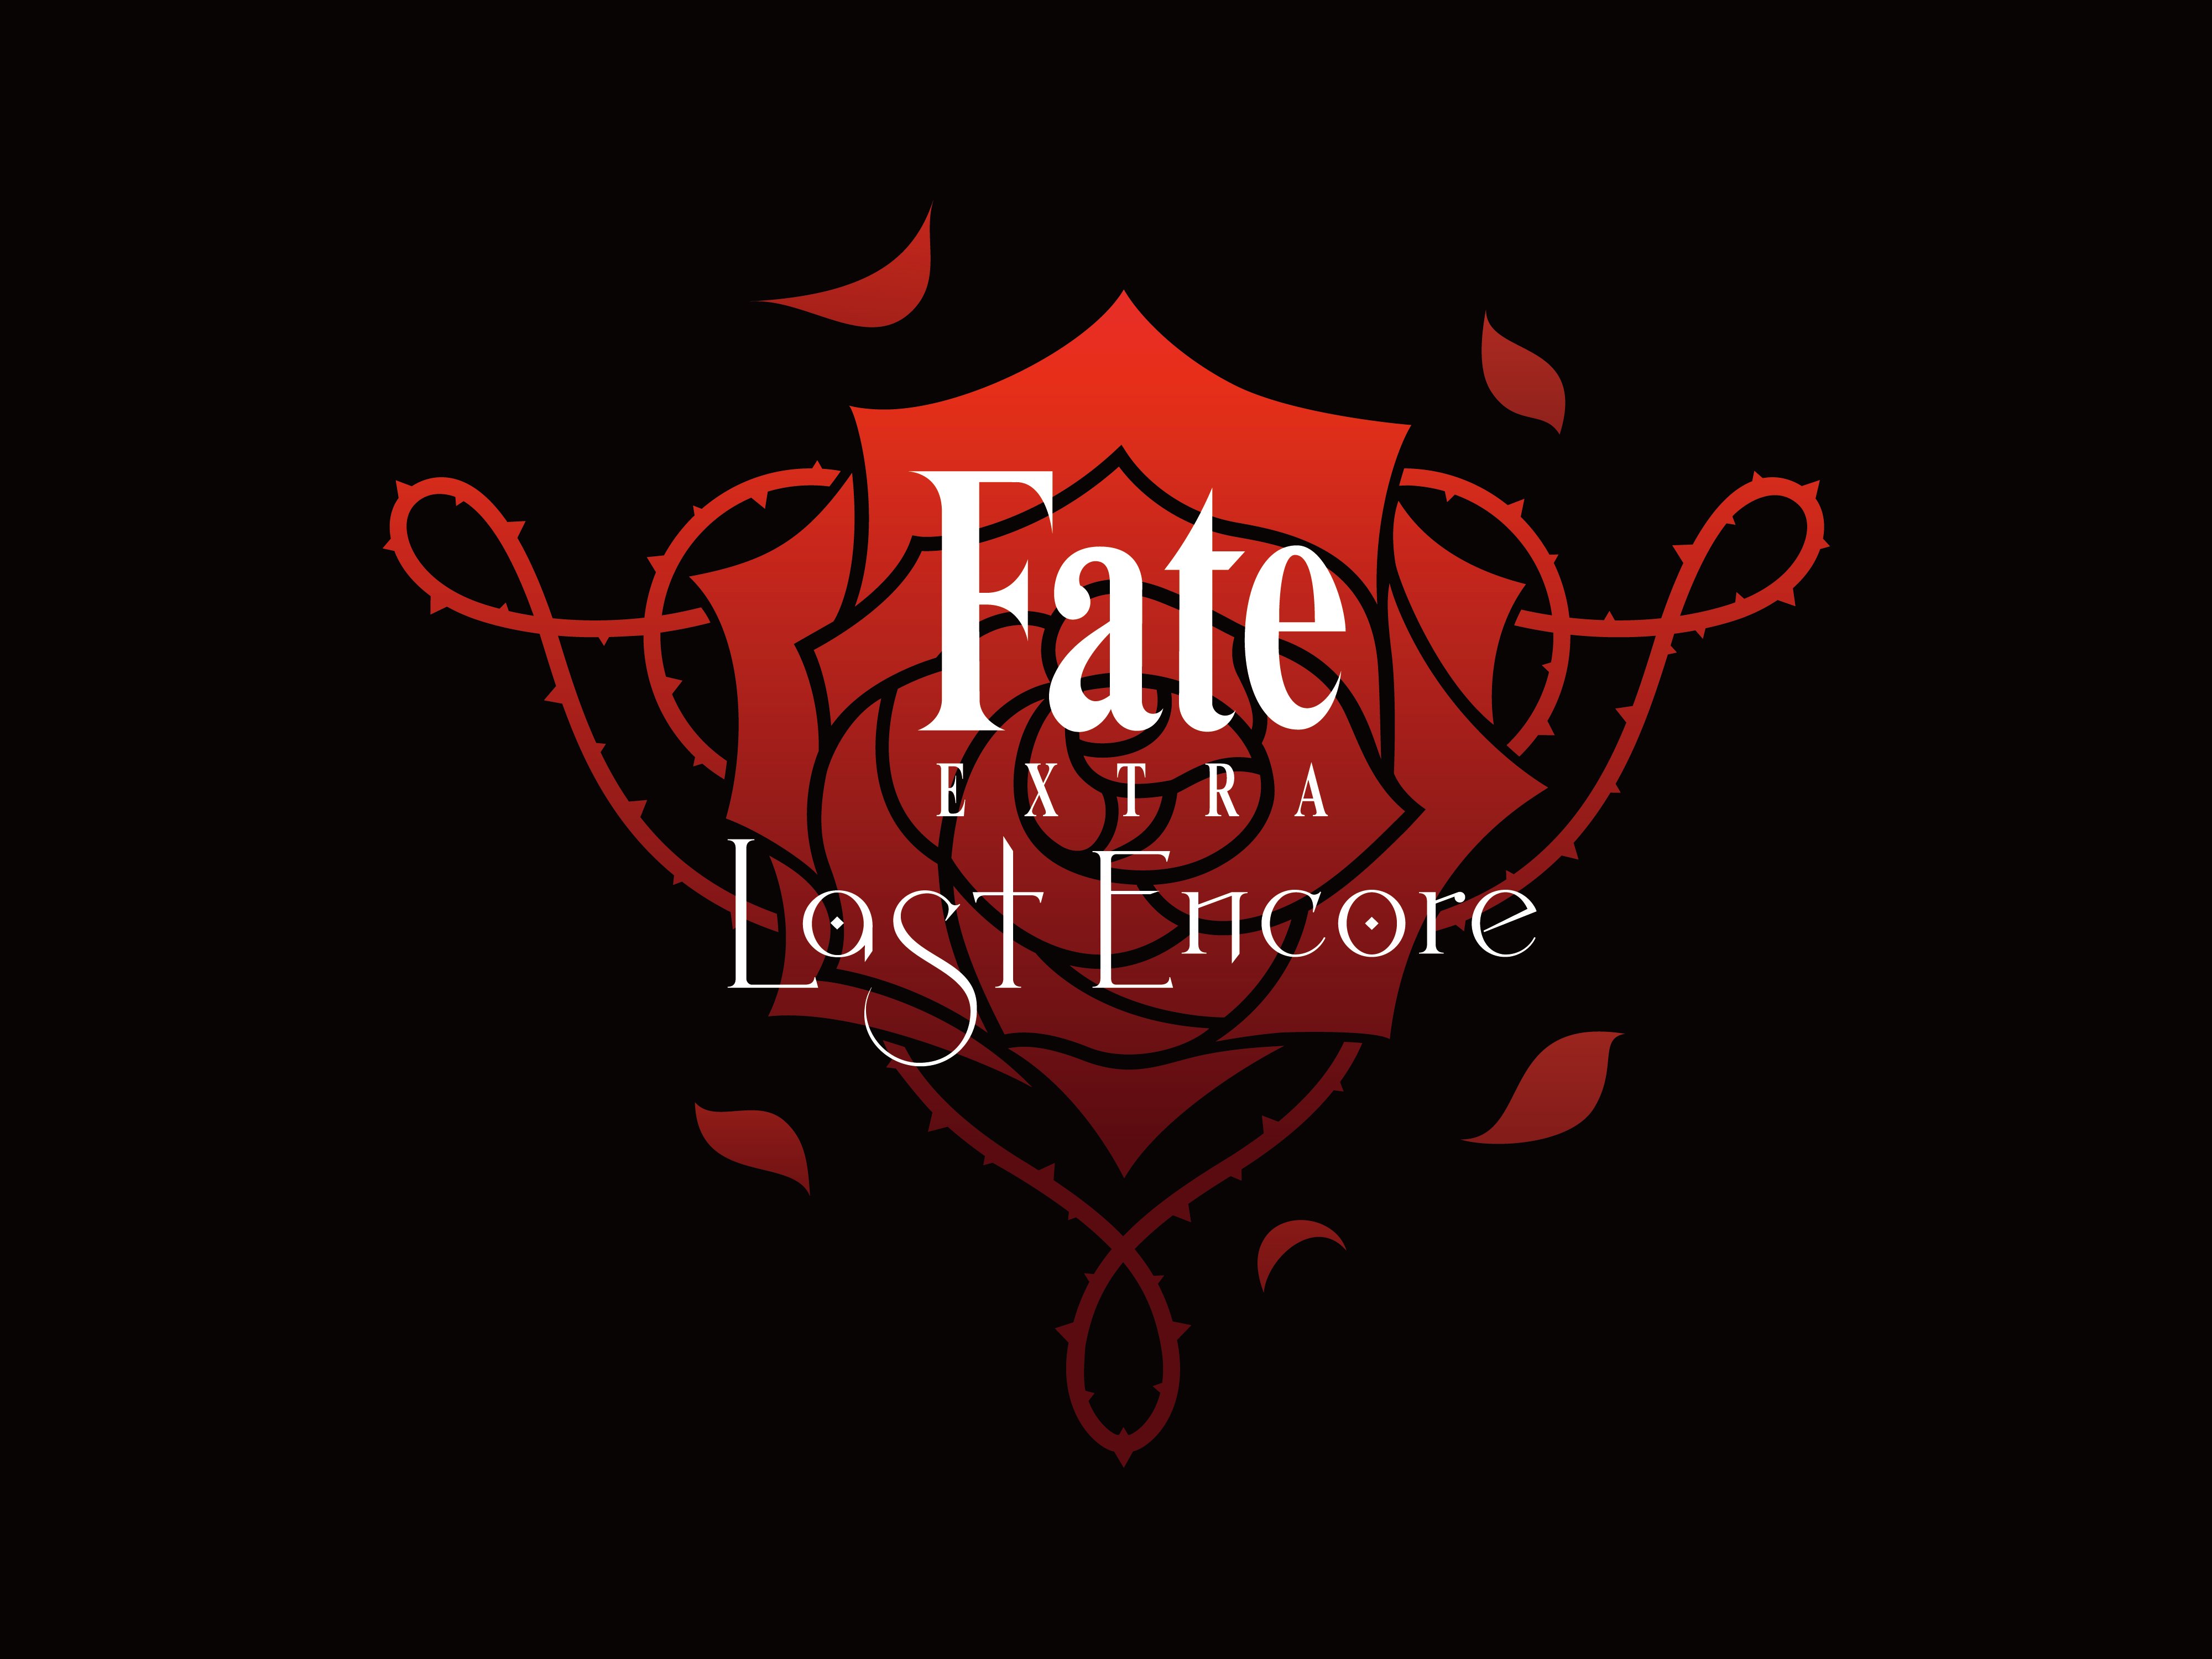 Fate/EXTRA Last Encore